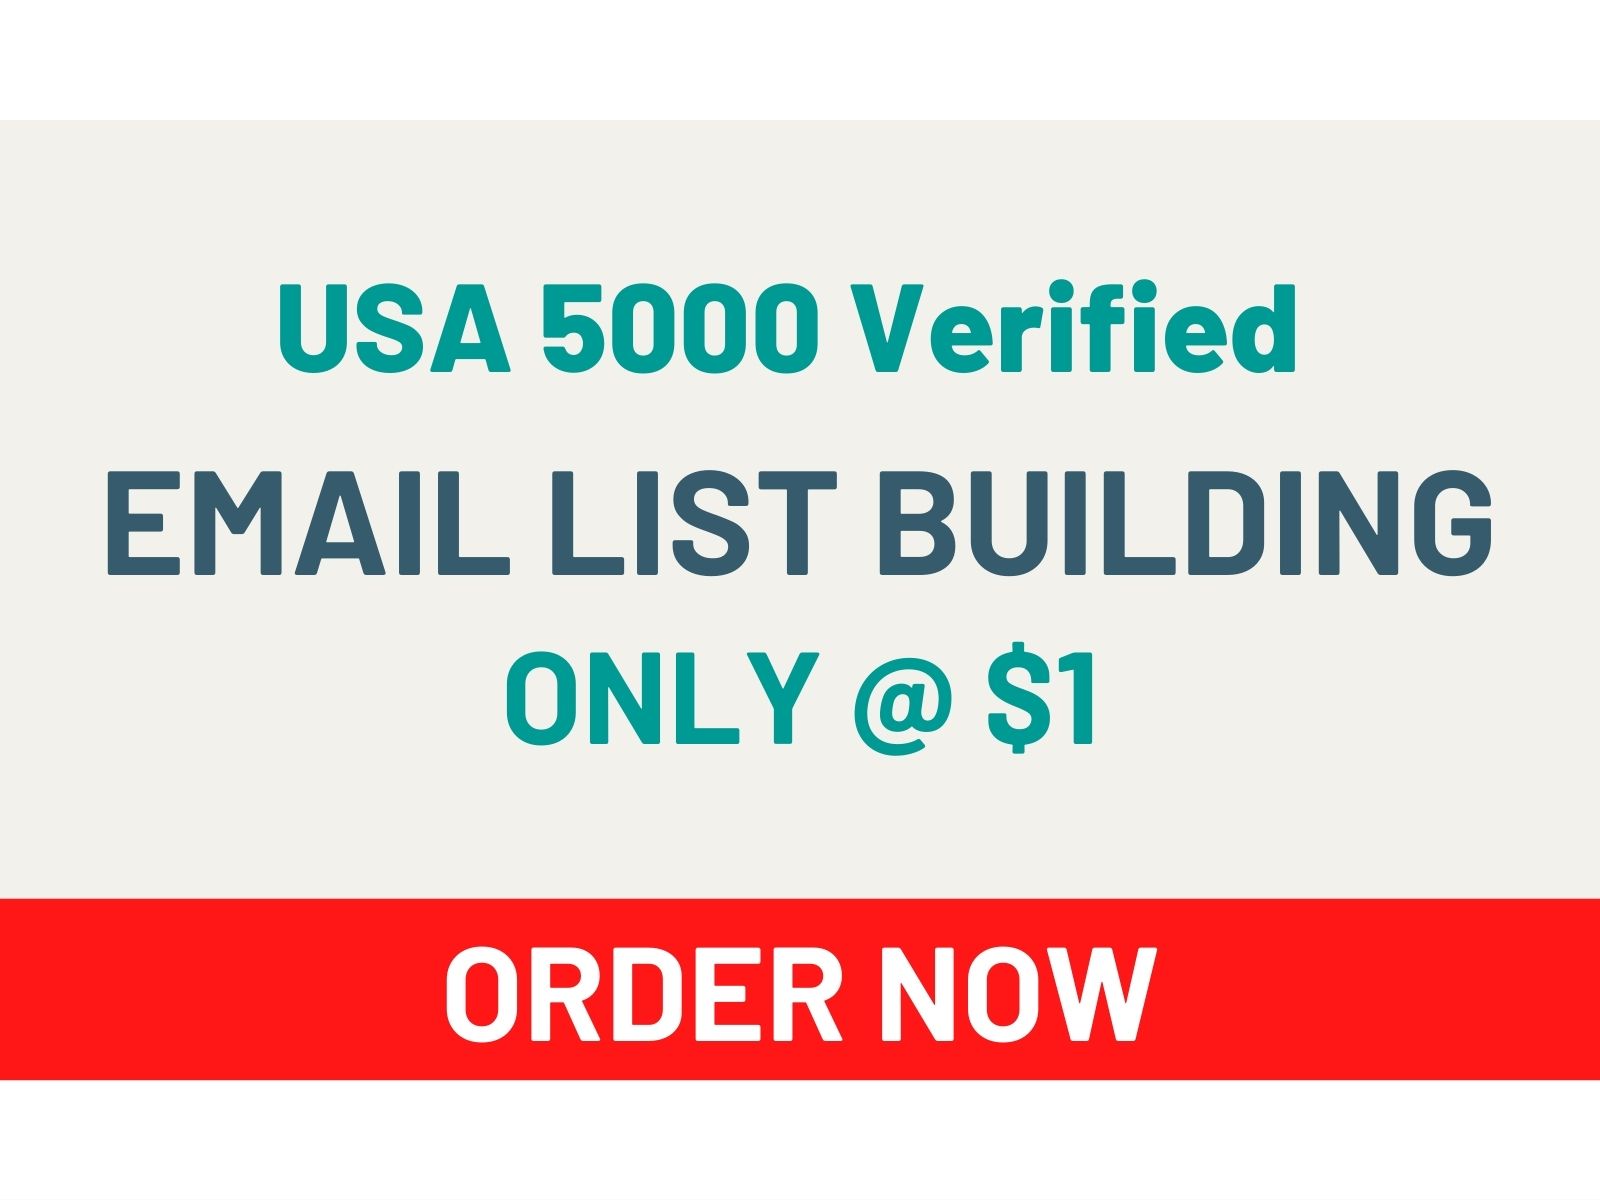 I Will Give You USA 5000 Verified Email List